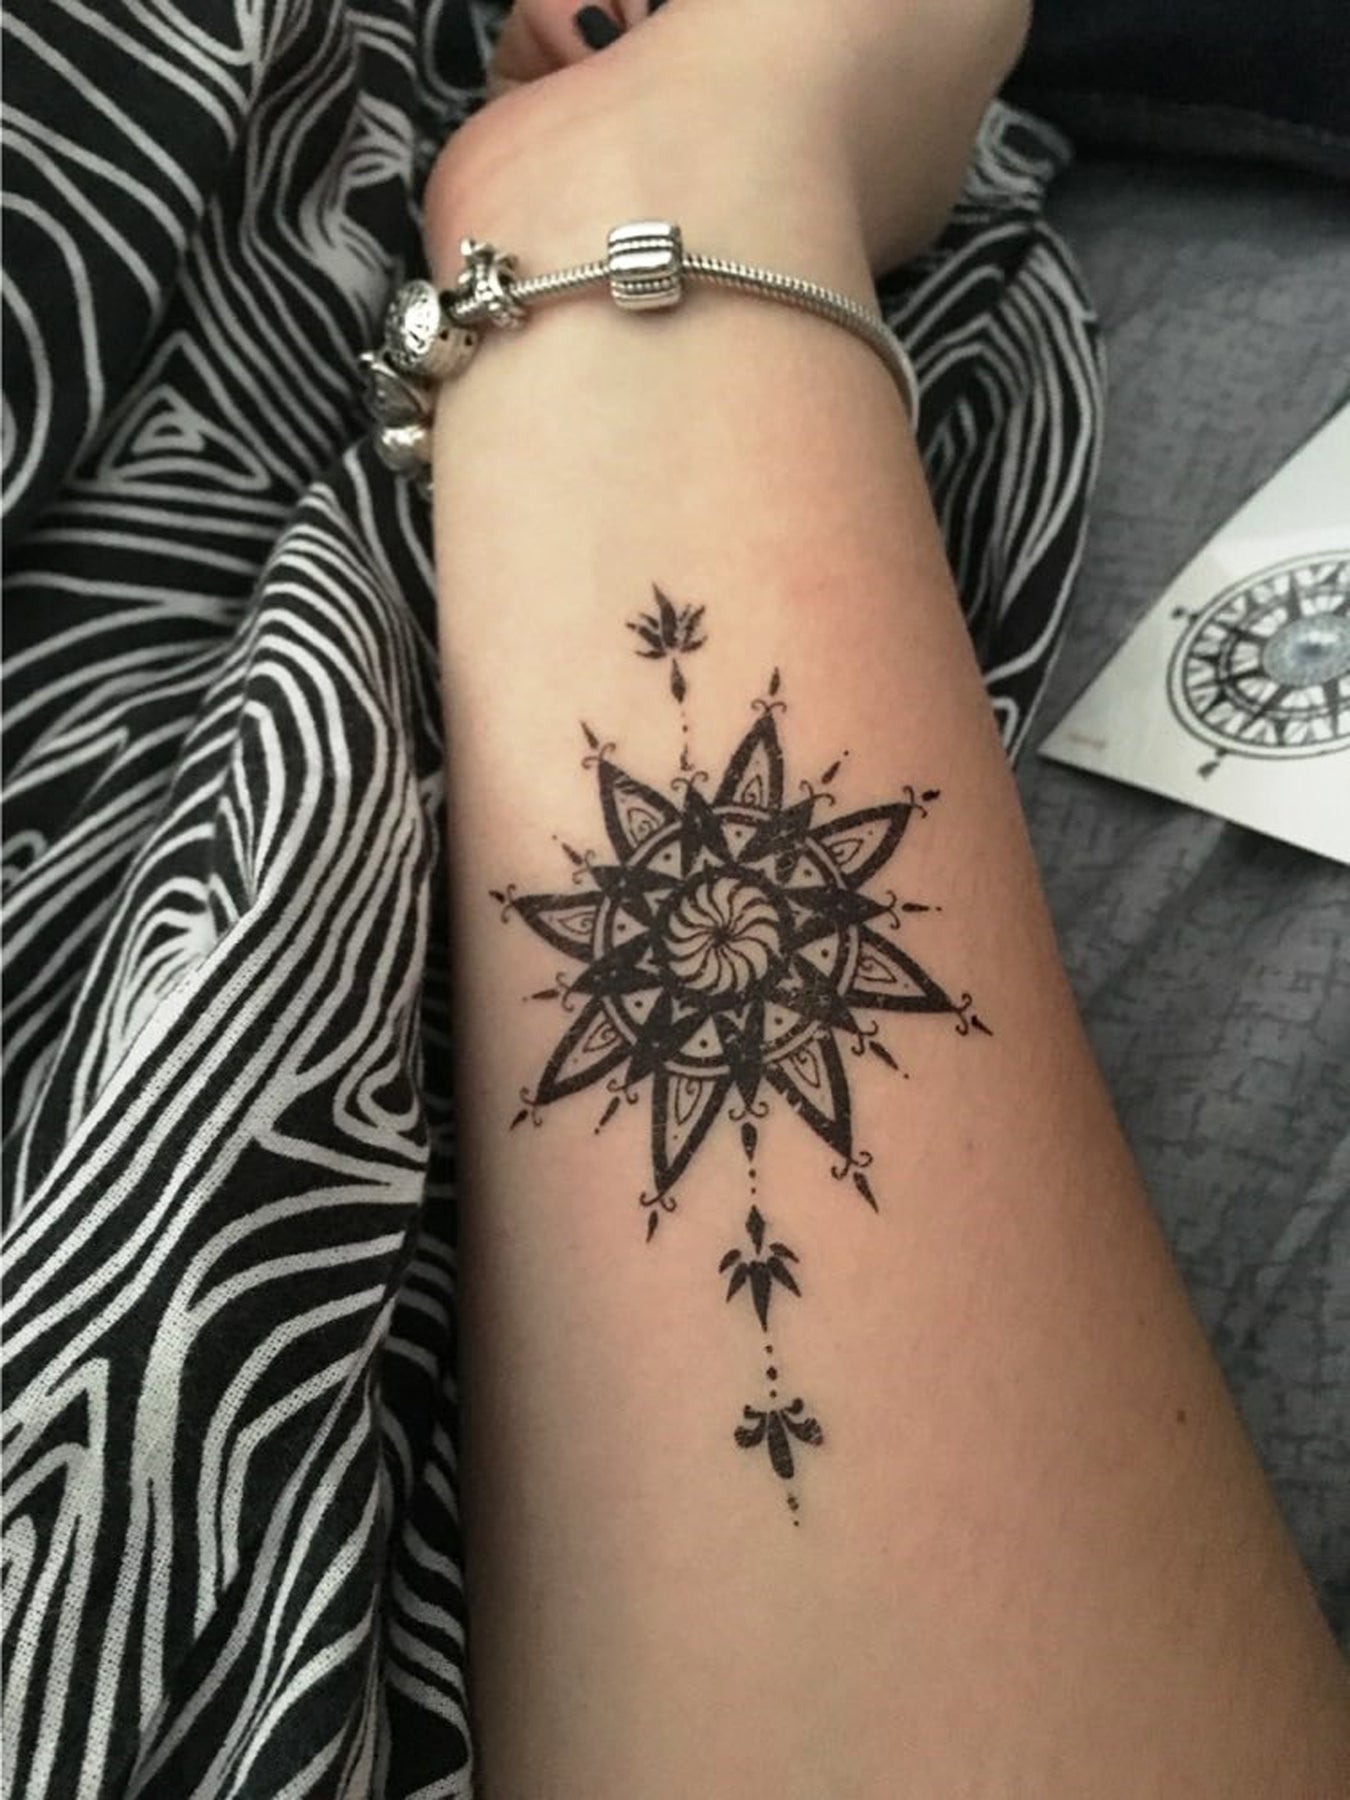 Mandala wrist tattoo by Mel van Hel by ElectronicSin on DeviantArt